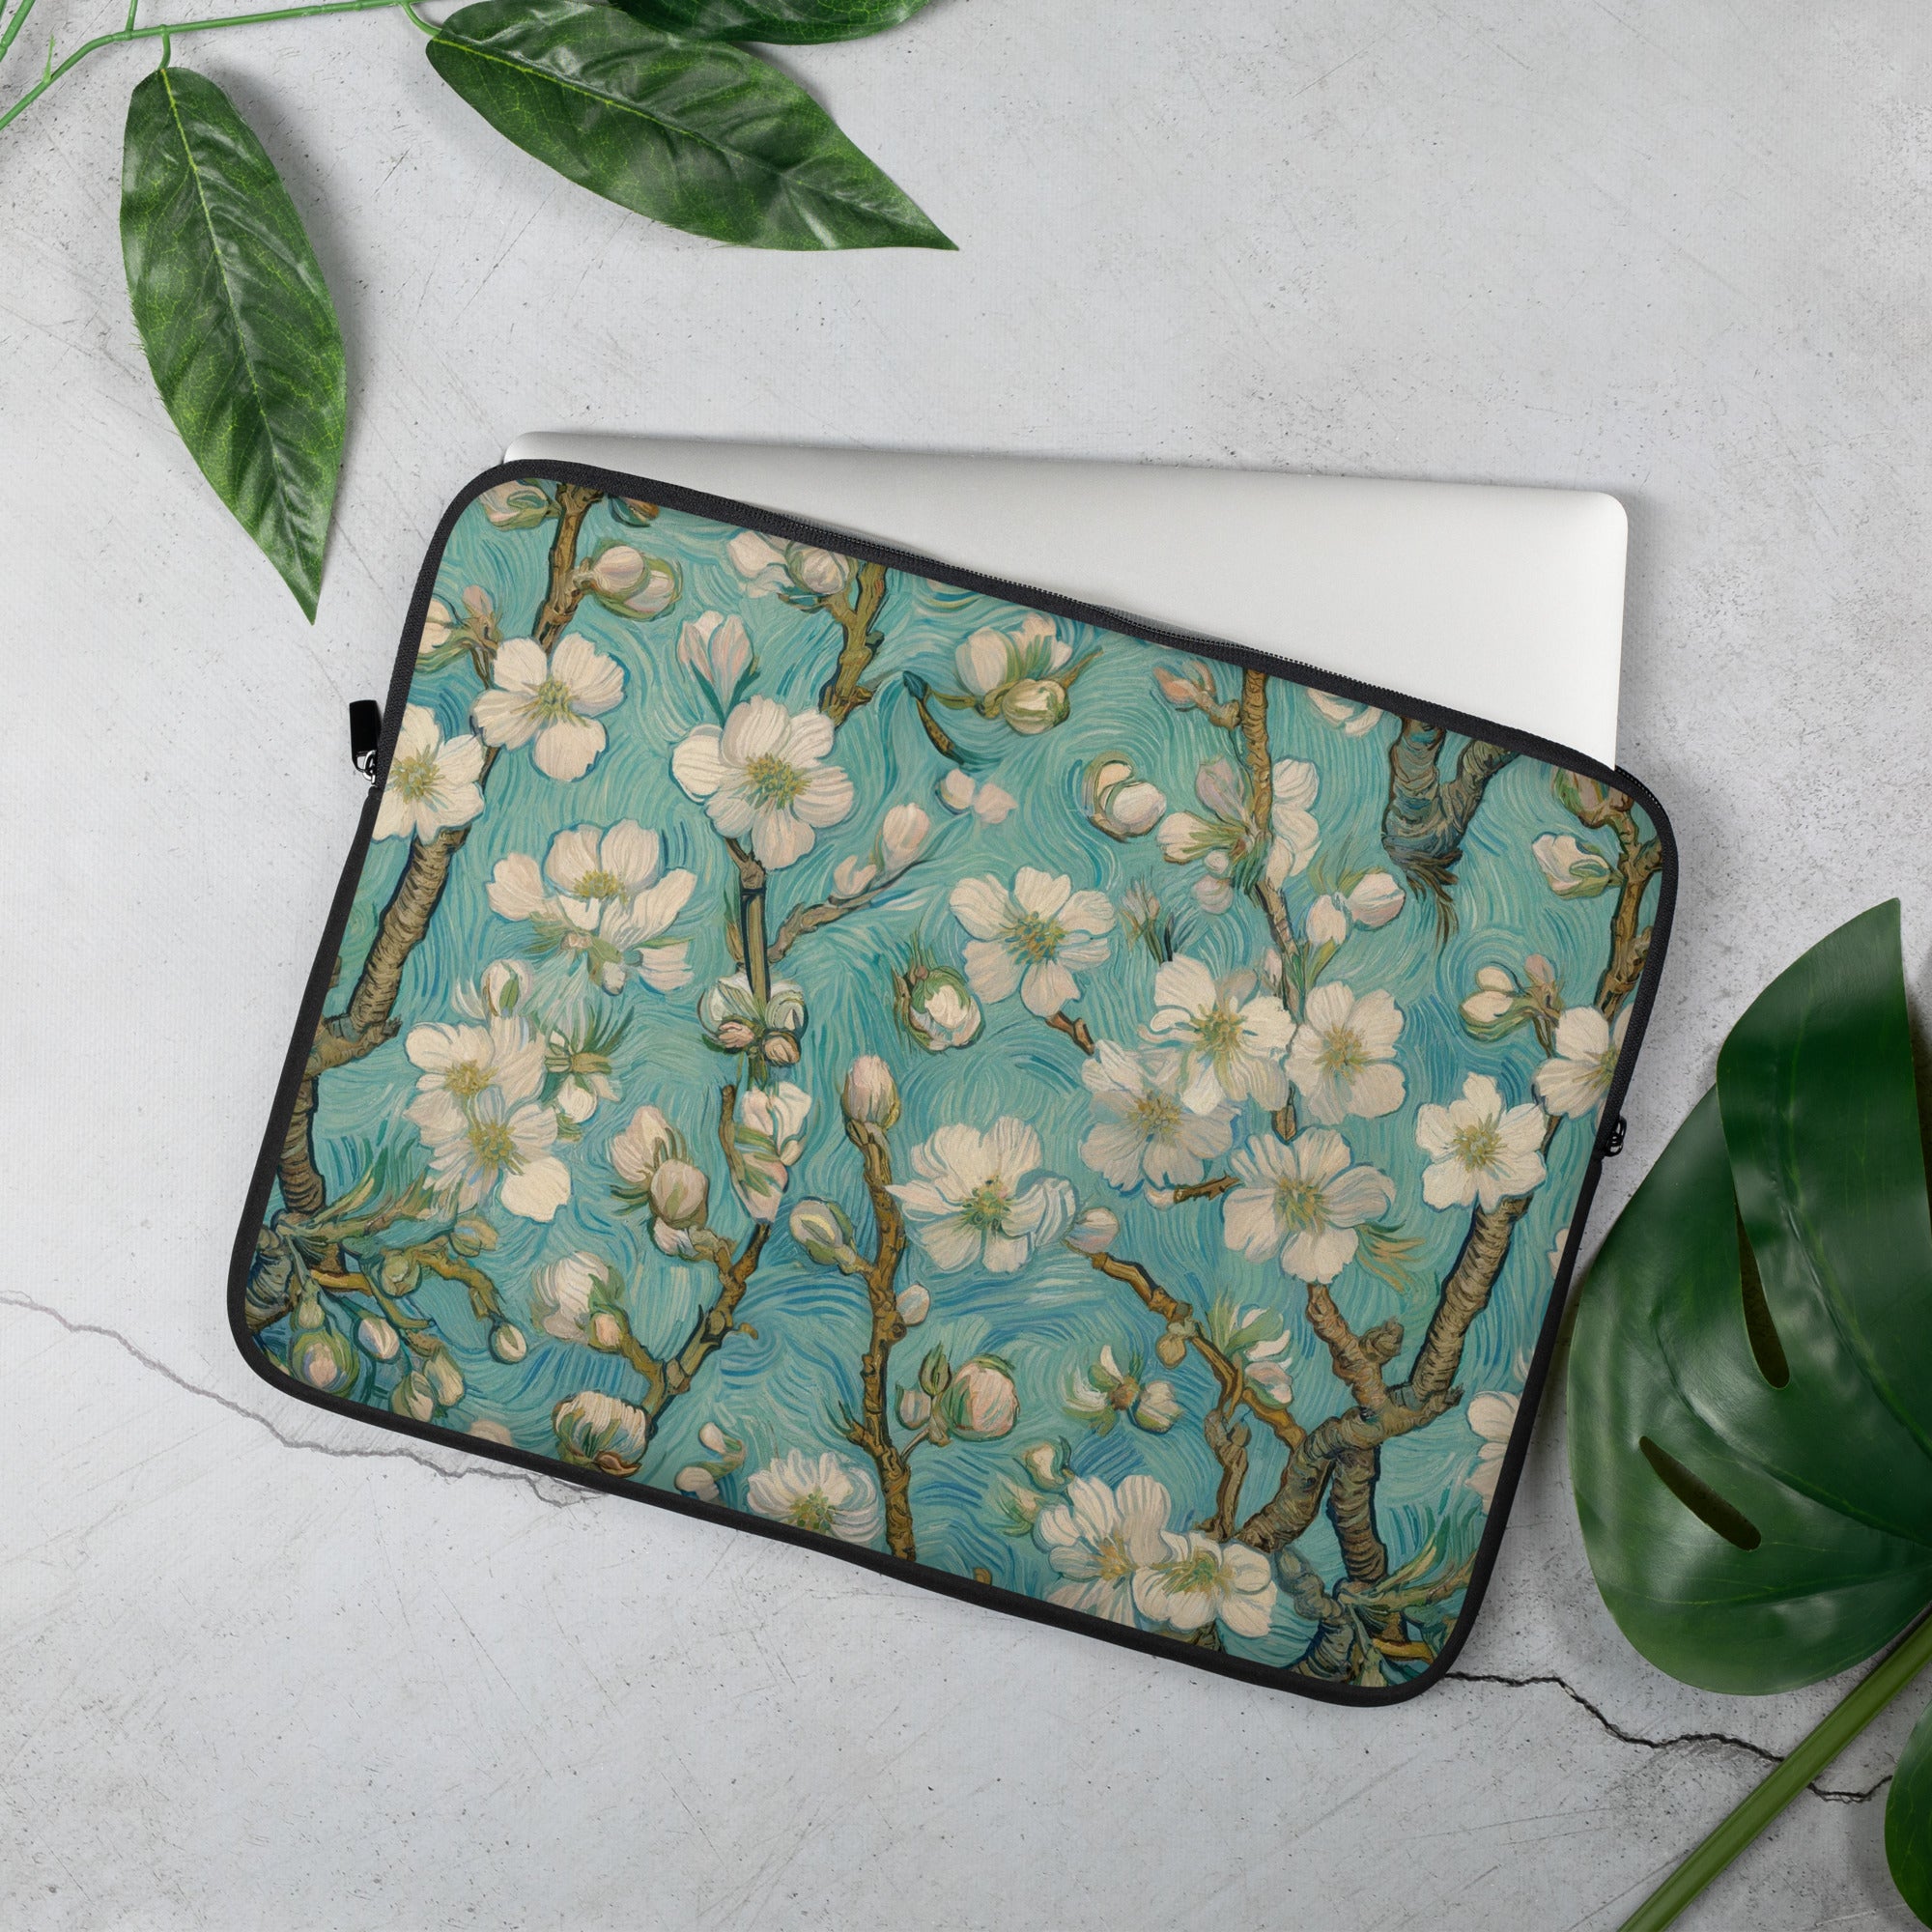 Vincent van Gogh 'Almond Blossom' Famous Painting Laptop Sleeve | Premium Art Laptop Sleeve 13"/15"